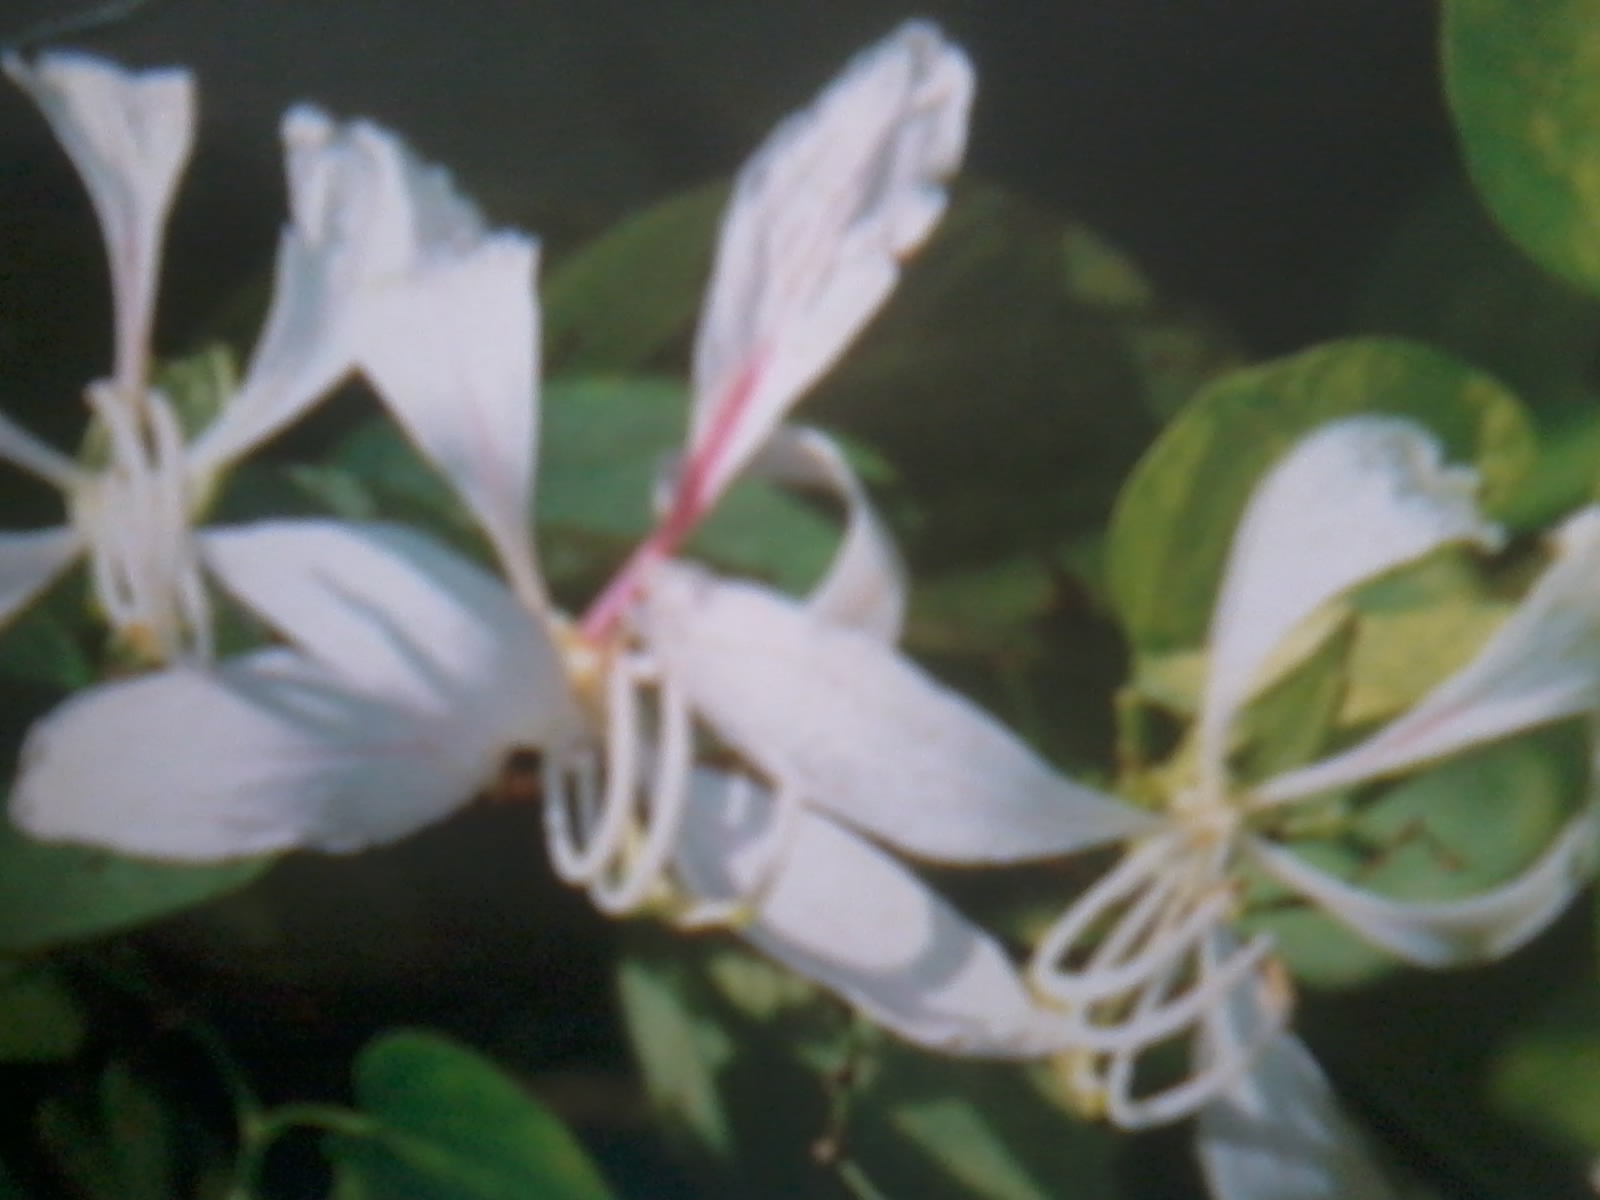  Bunga  Kupu  kupu  tamanraja